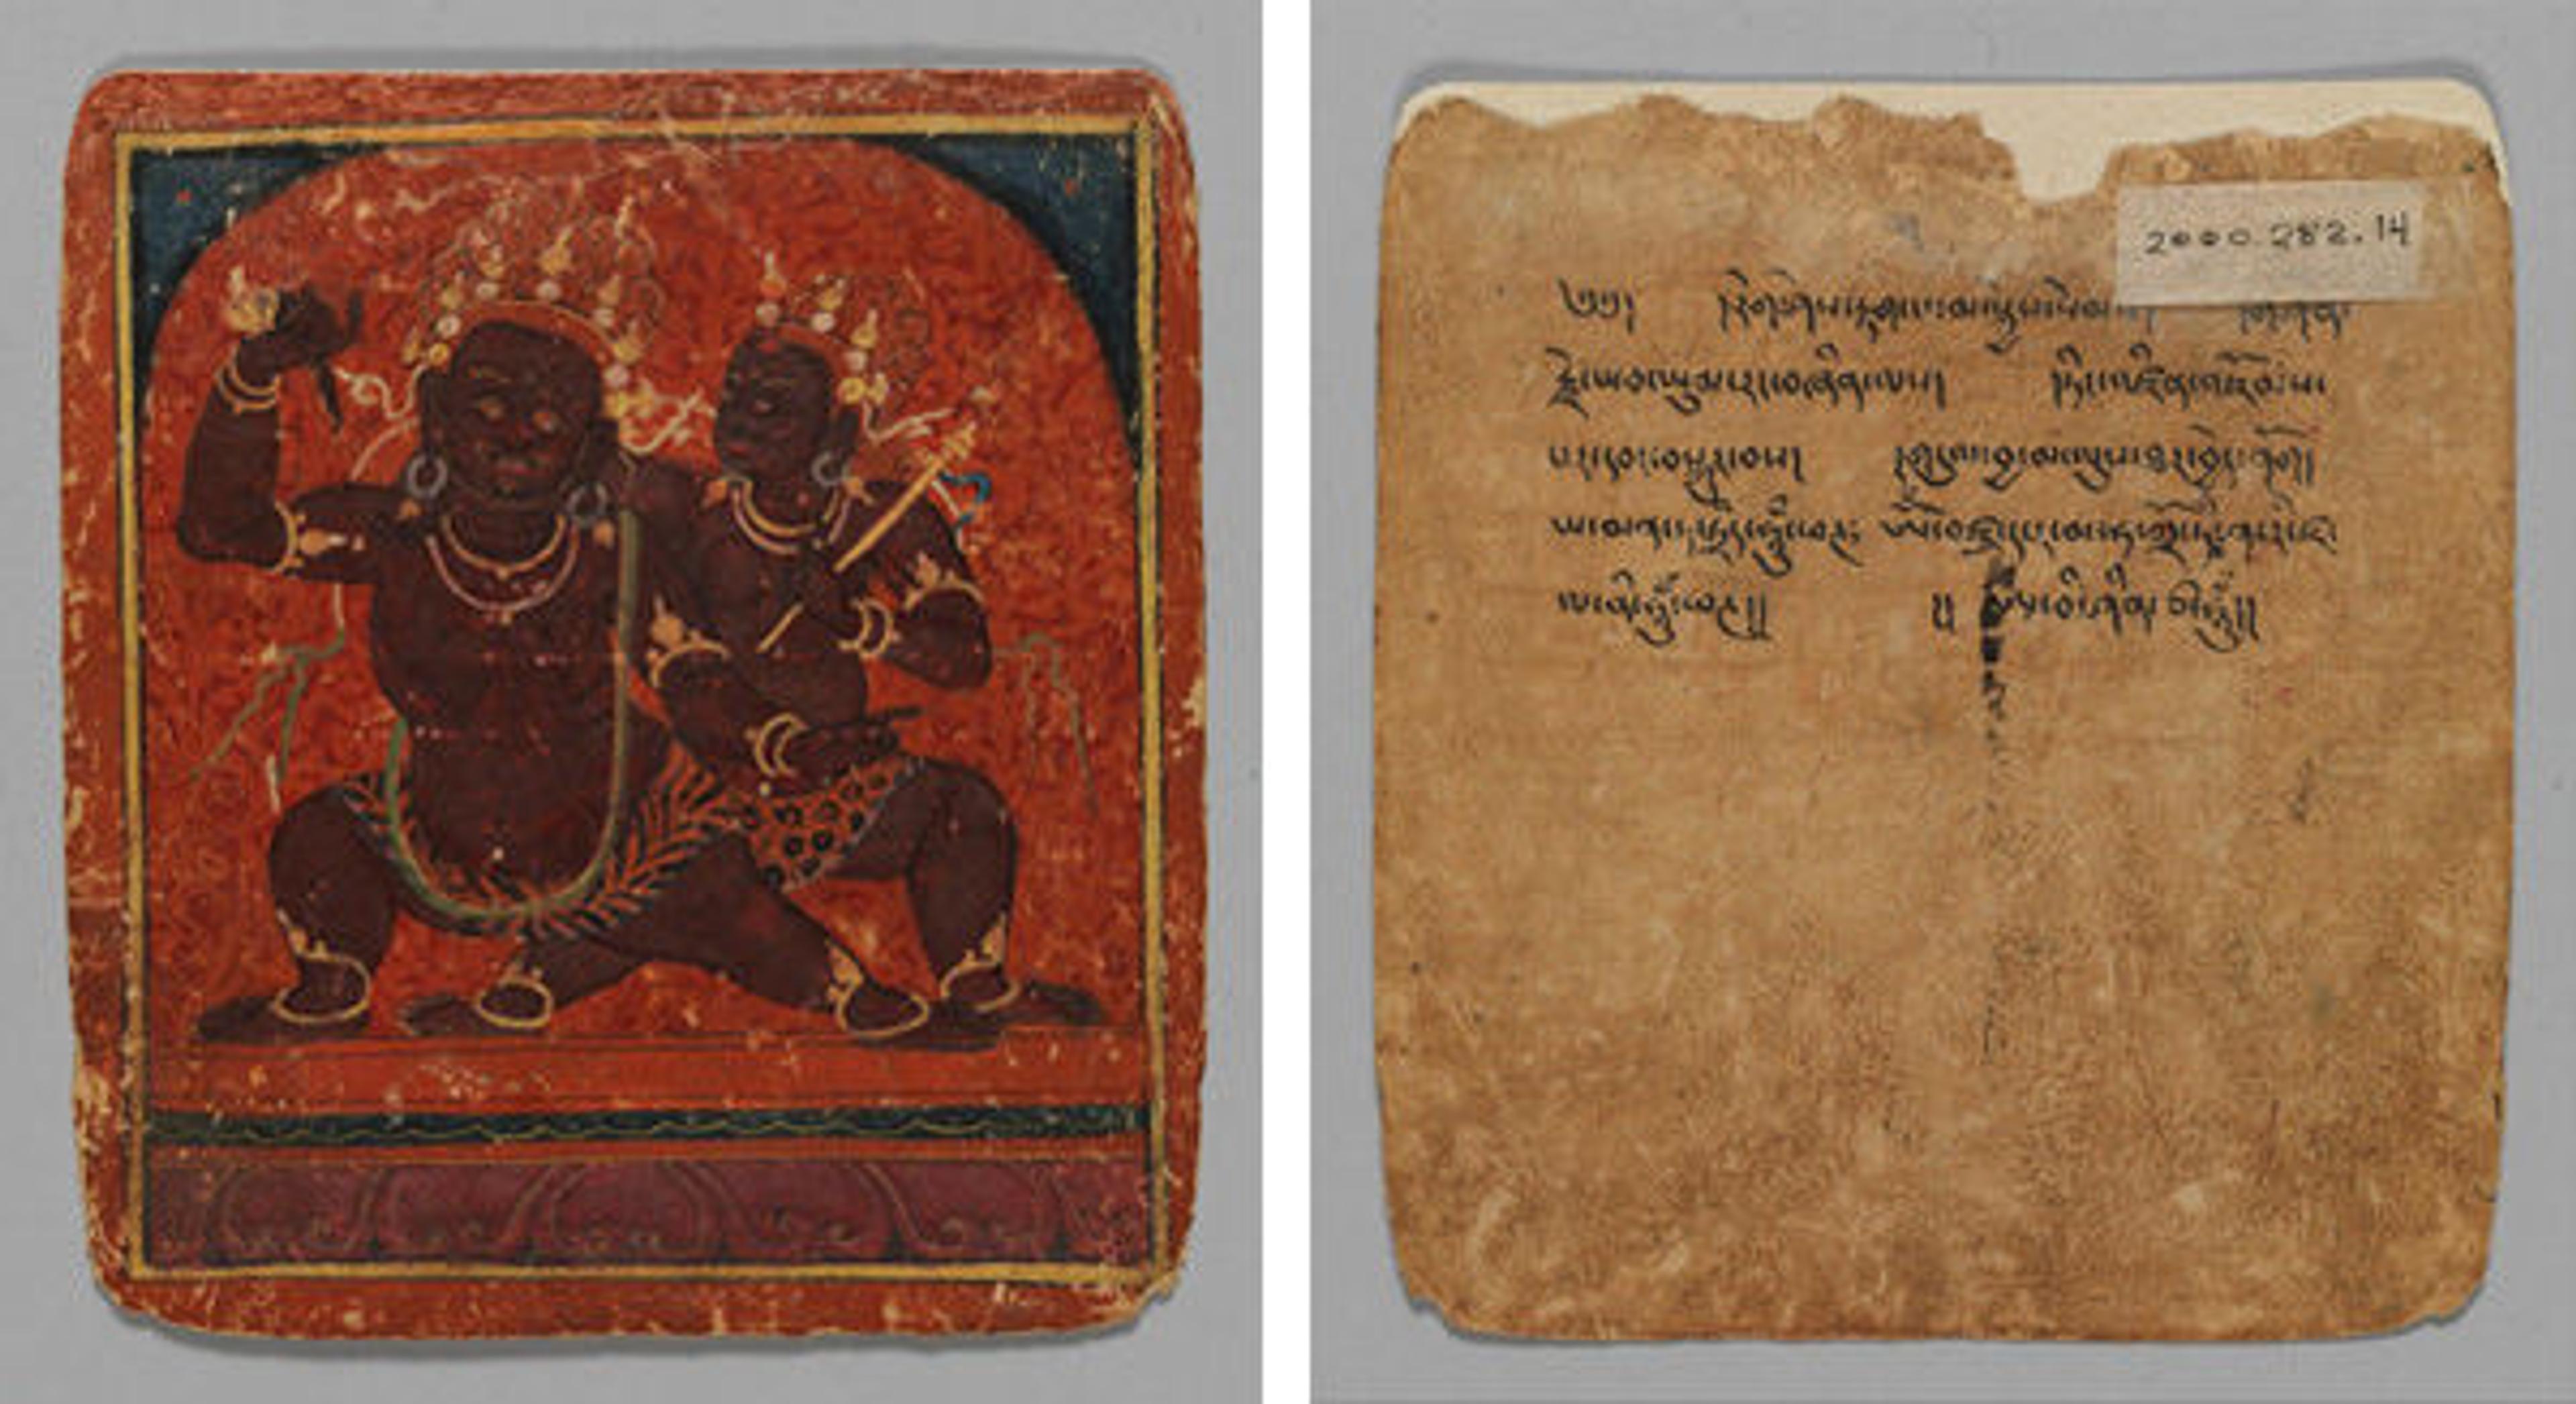 Initiation Card (Tsakalis), early 15th century. Tibet. 2000.282.14